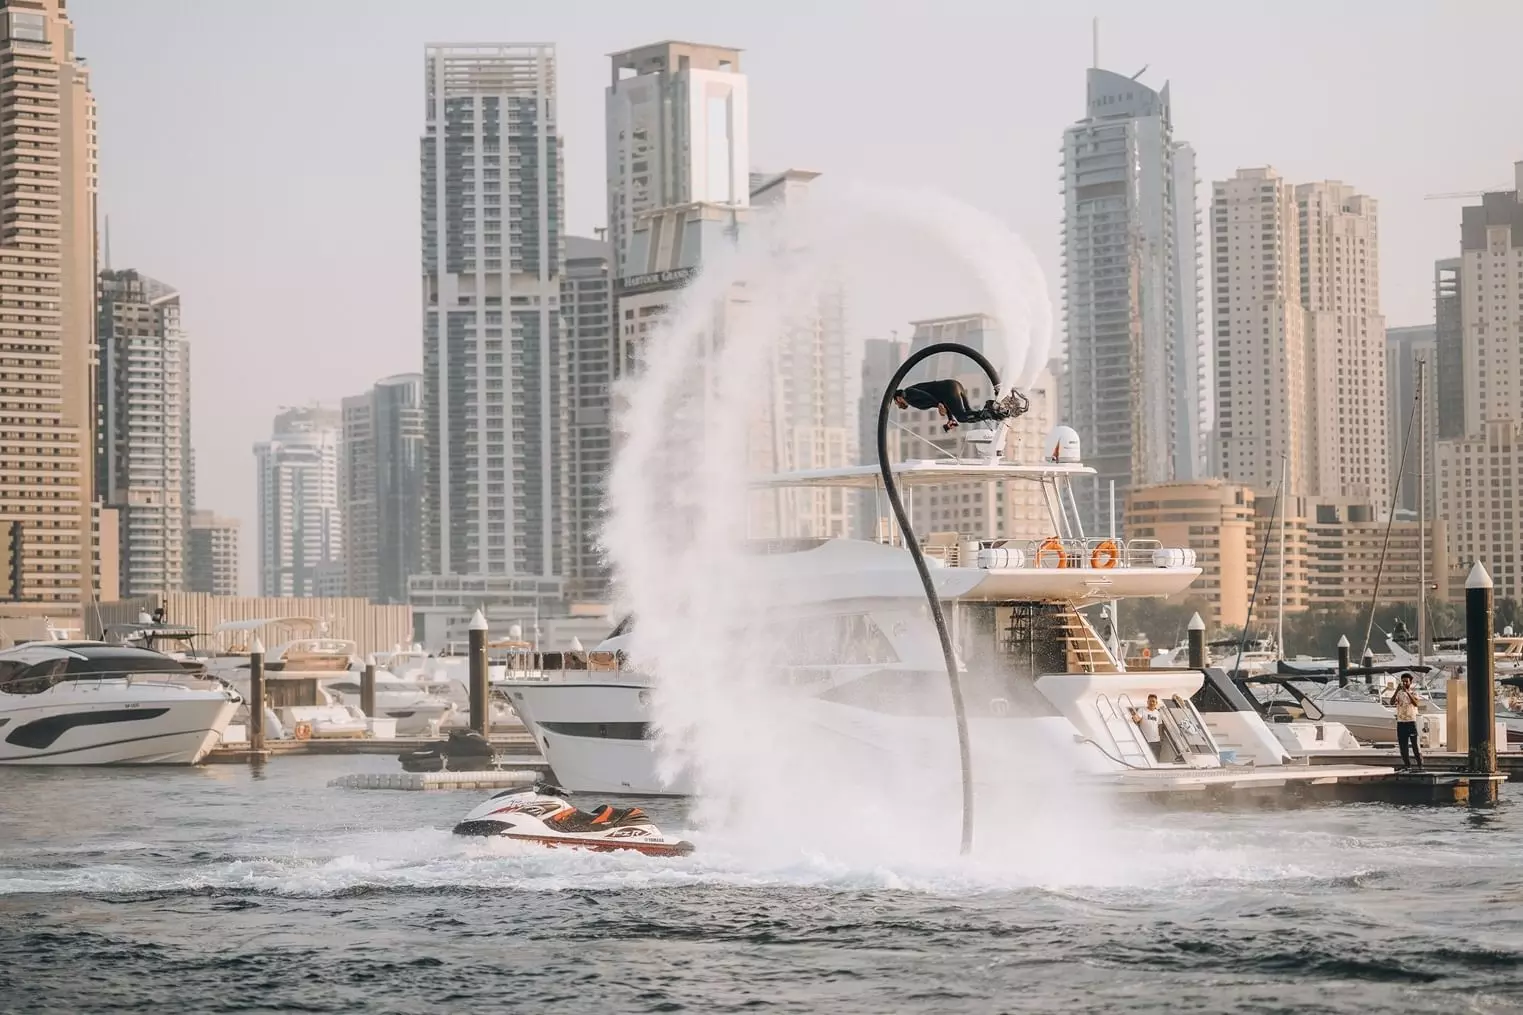 Dubai International Boat Show begins on Feb 28